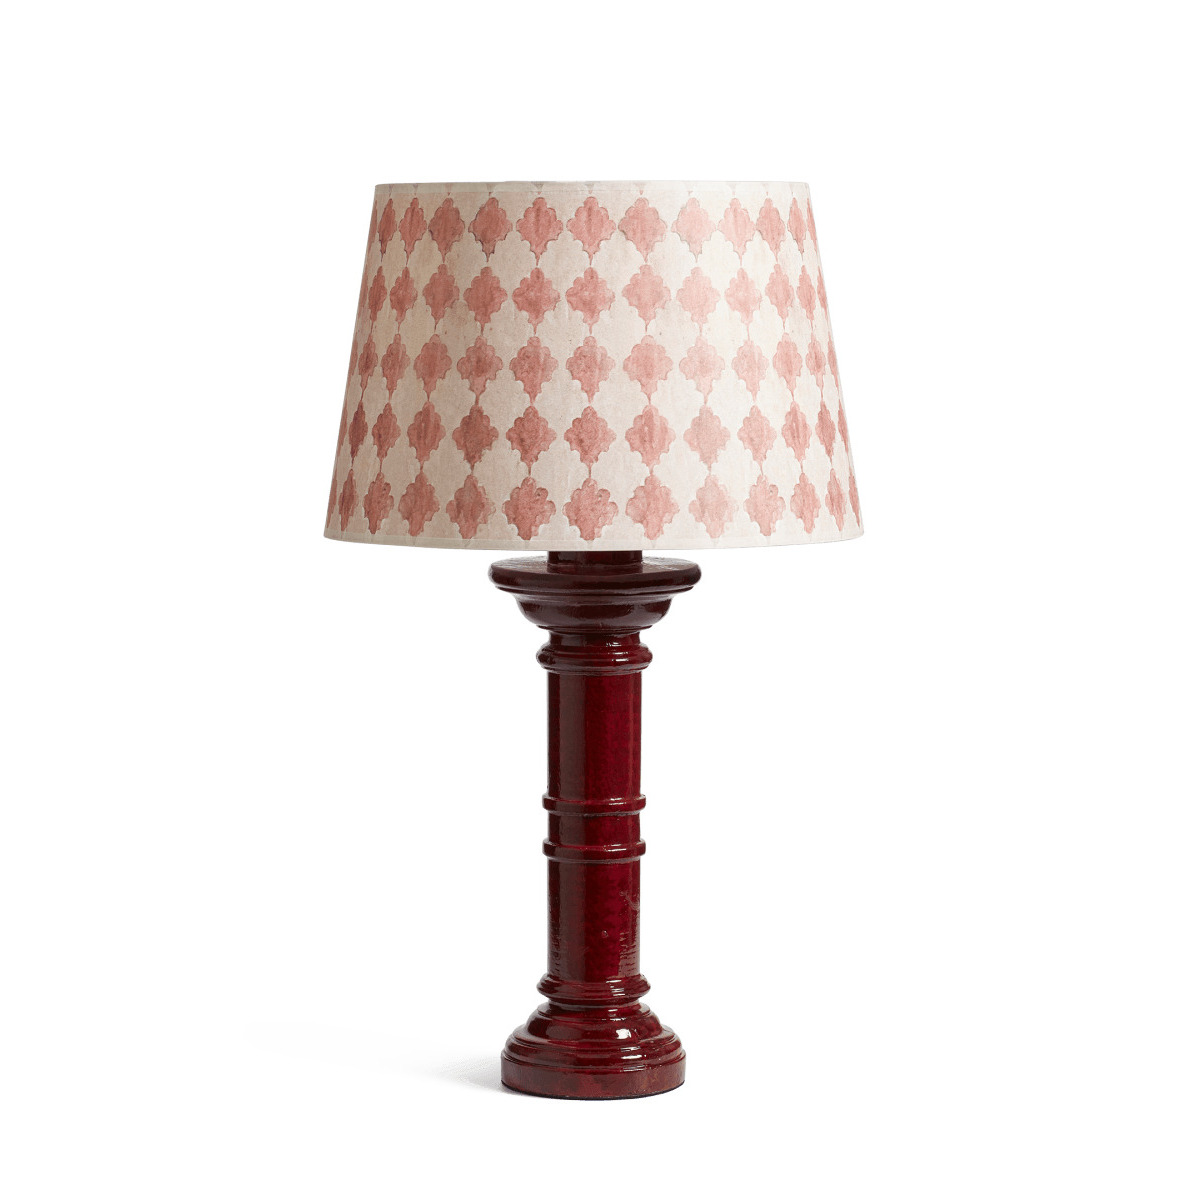 OKA, OKA X Cabana Pilastro Table Lamp - Burgundy, Table Lamps, Metal/Plastic/Wood